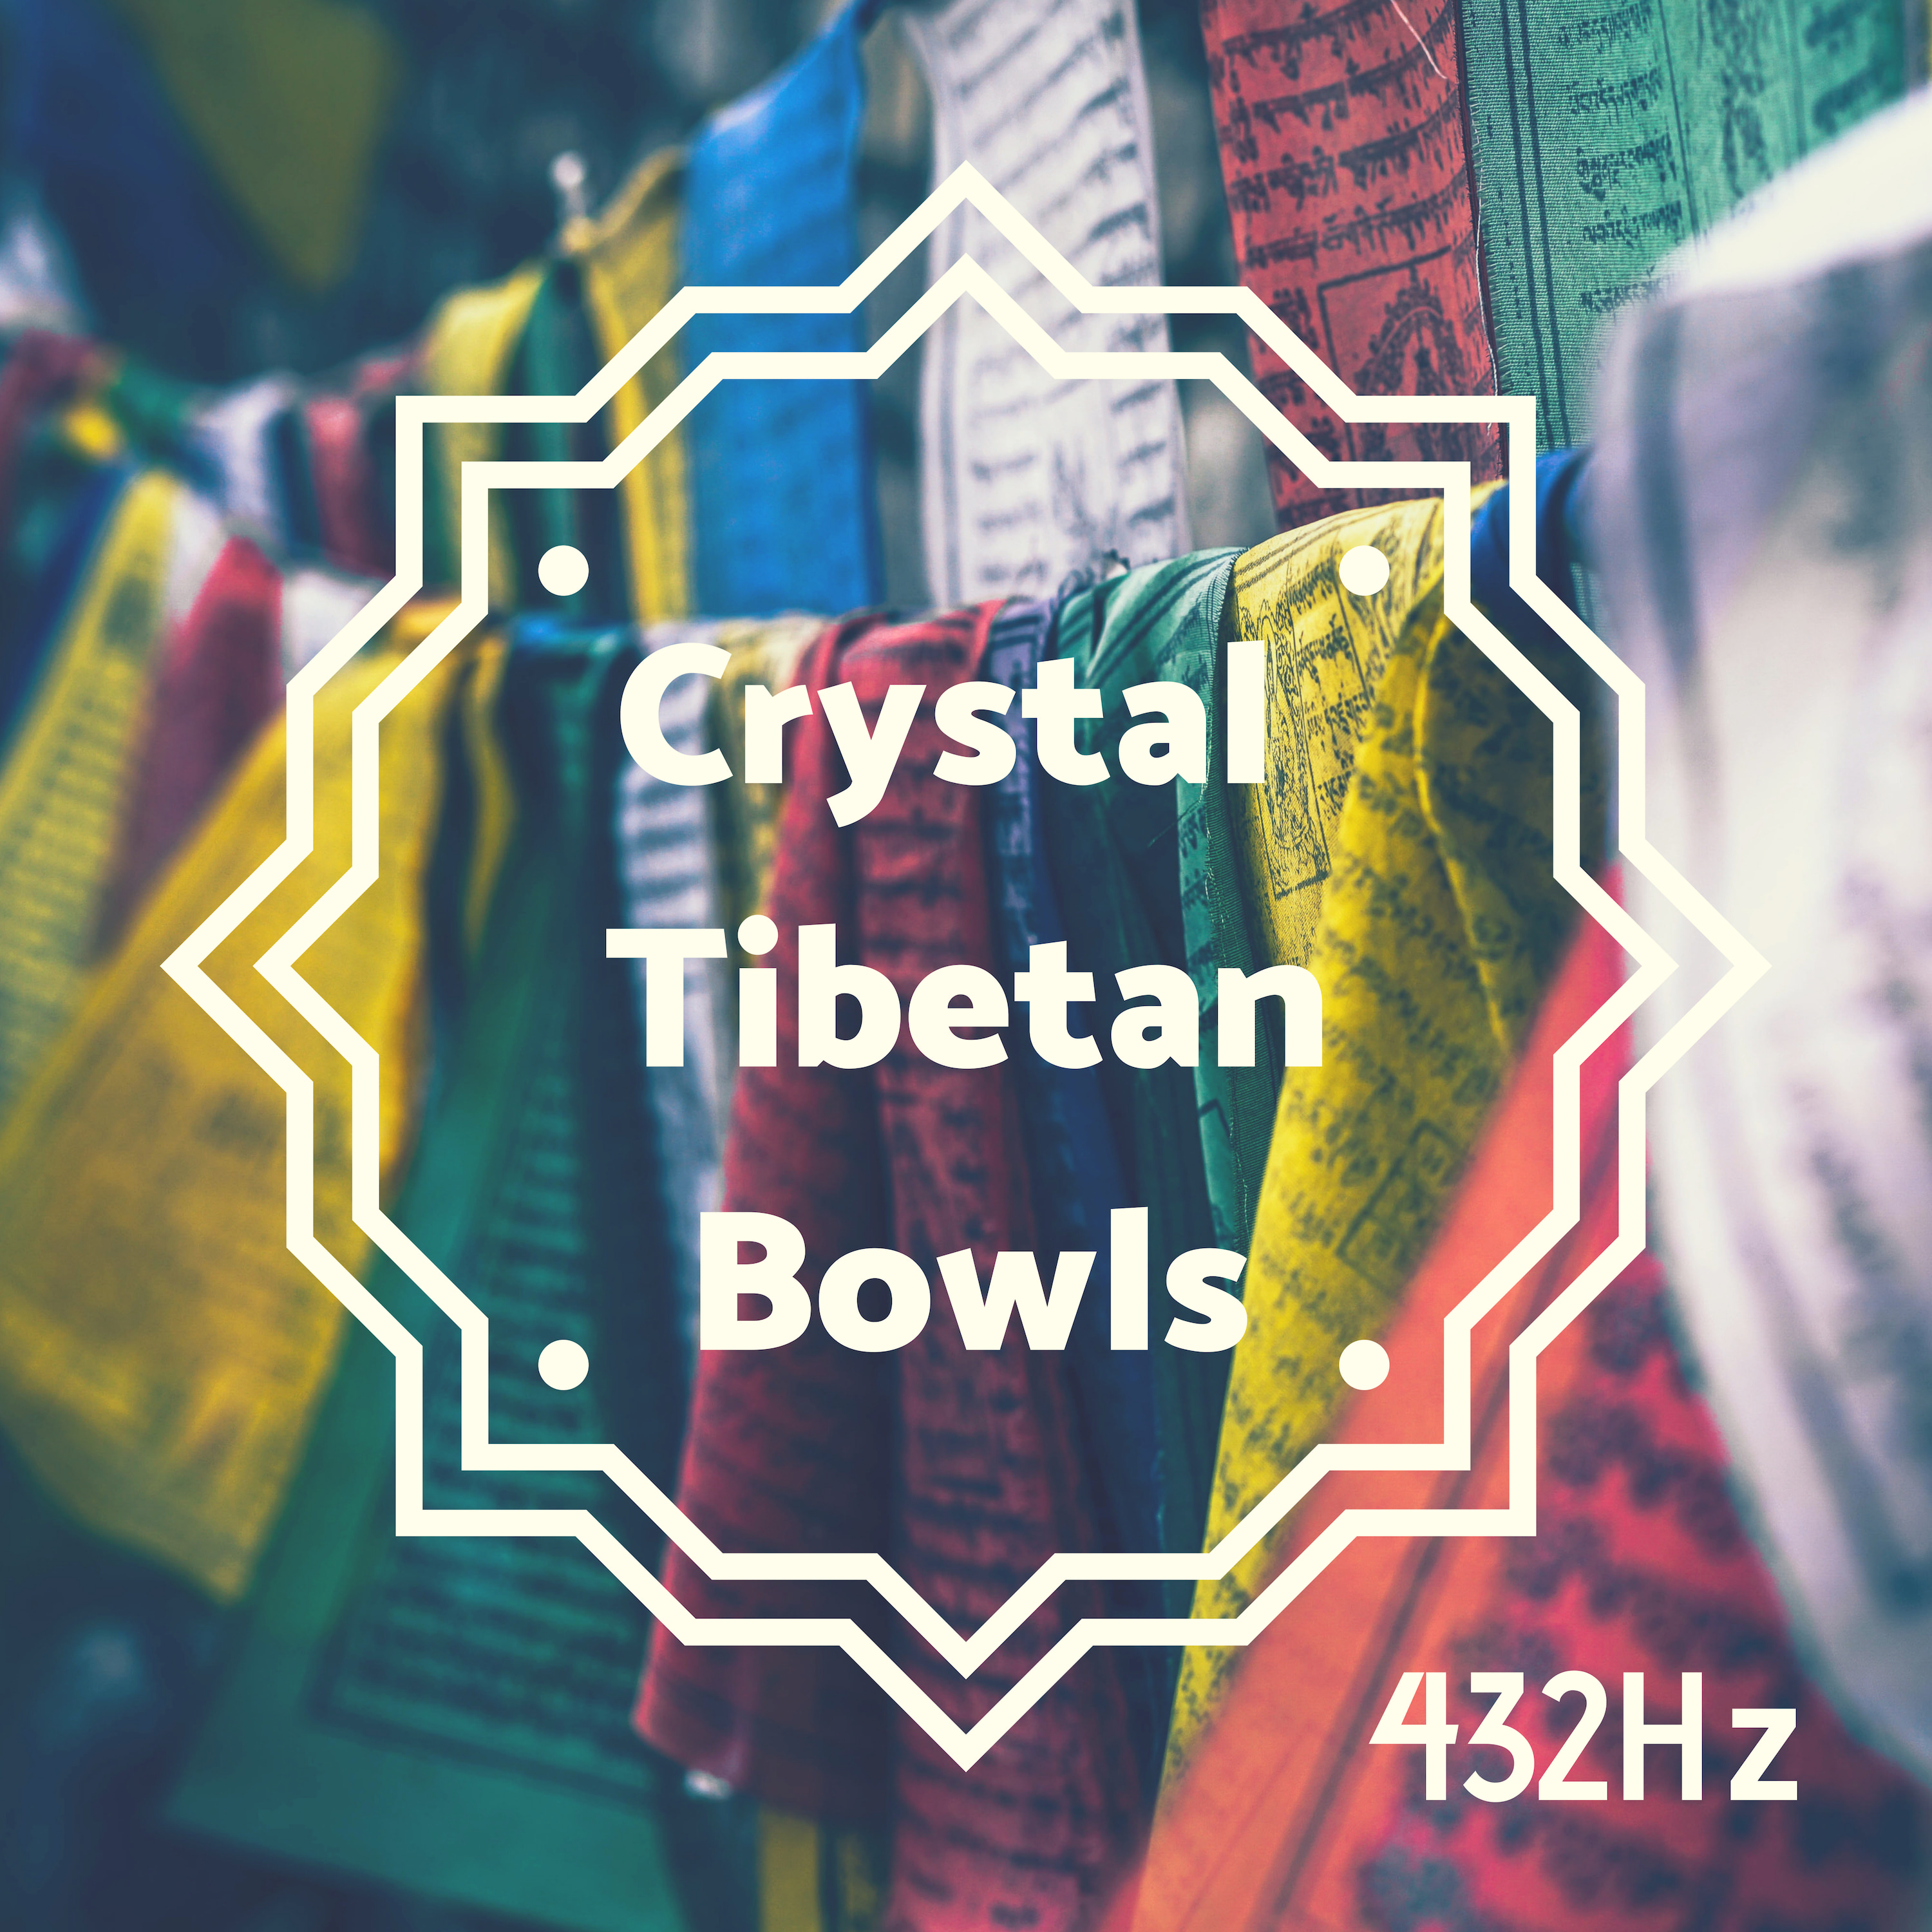 Crystal Tibetan Bowls 432HZ